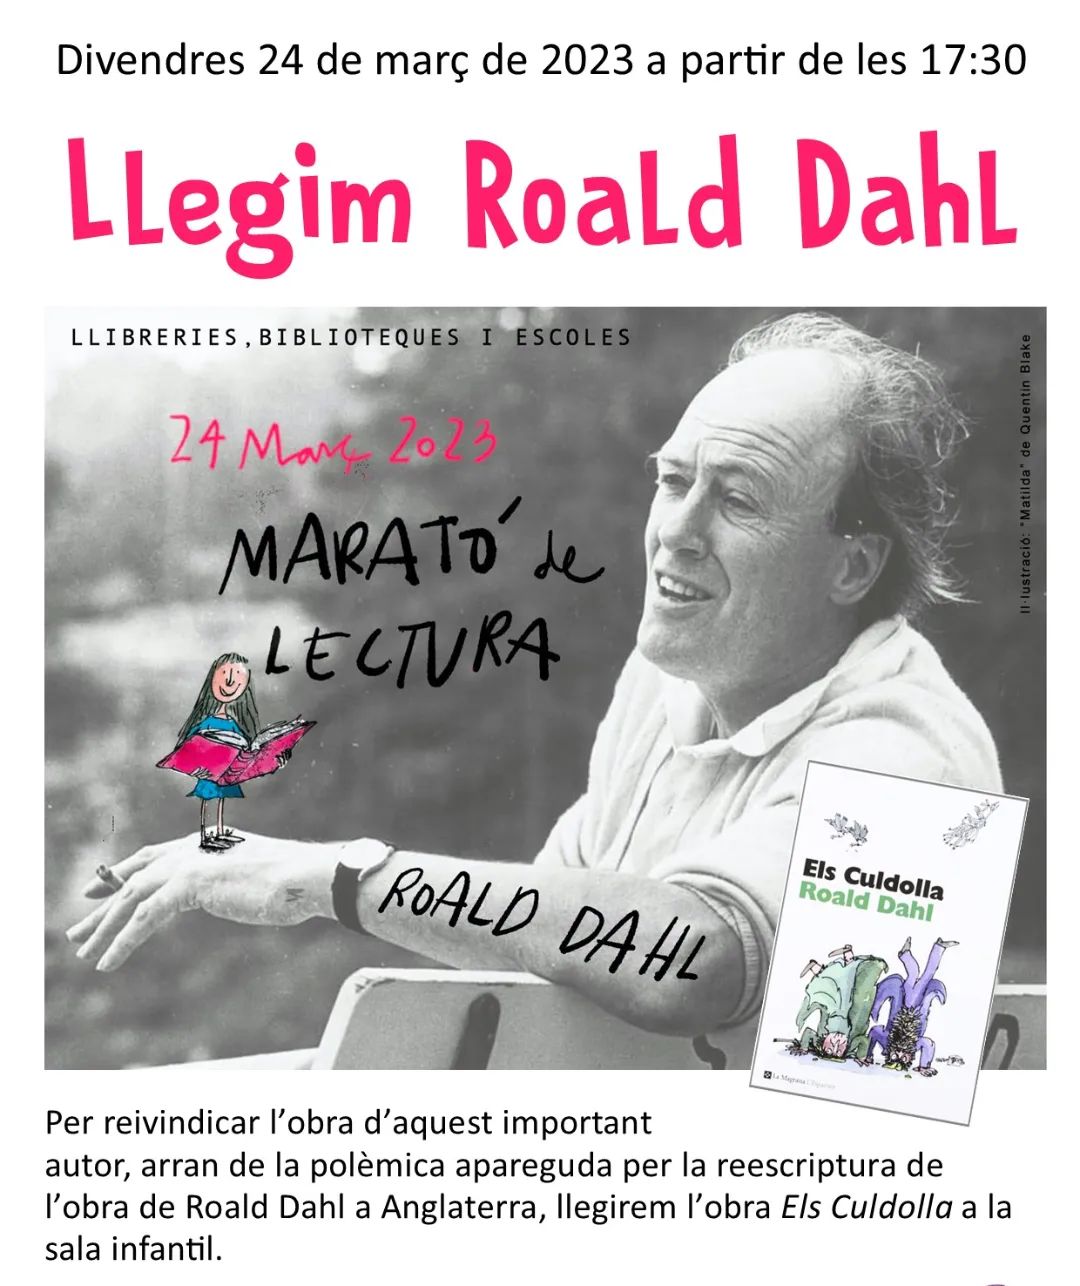 Llegim Roald Dahl